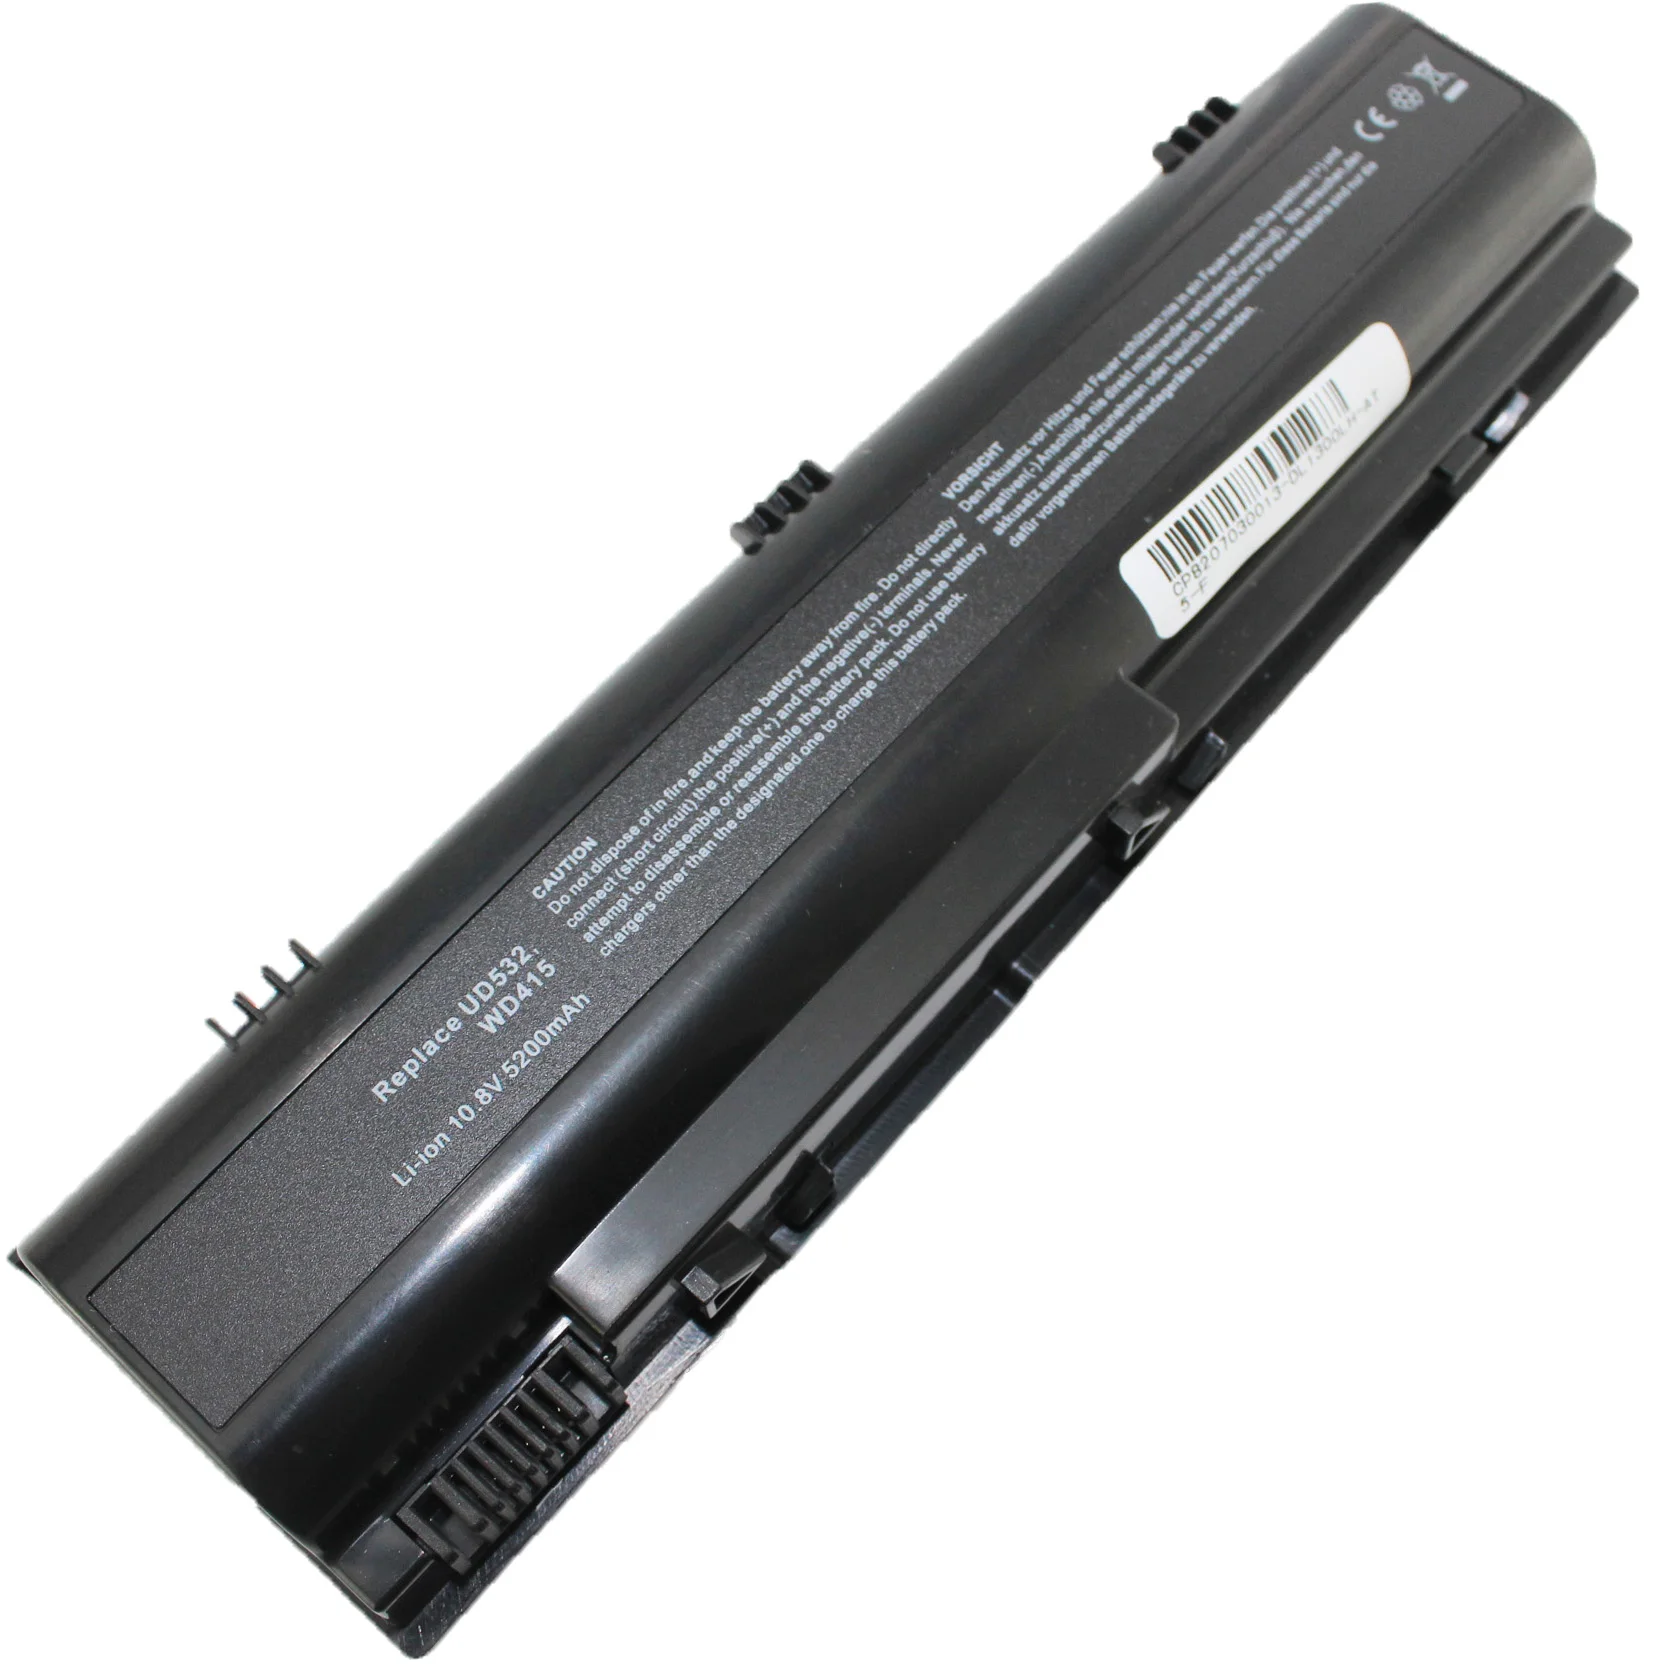 Baterie noua pentru laptop Dell Inspiron 1300 B120 B130 Latitude 120L laptop HD438 KD186 312-0366 UD384 UD532 UD533 WD414 WD415 WD416 WD417